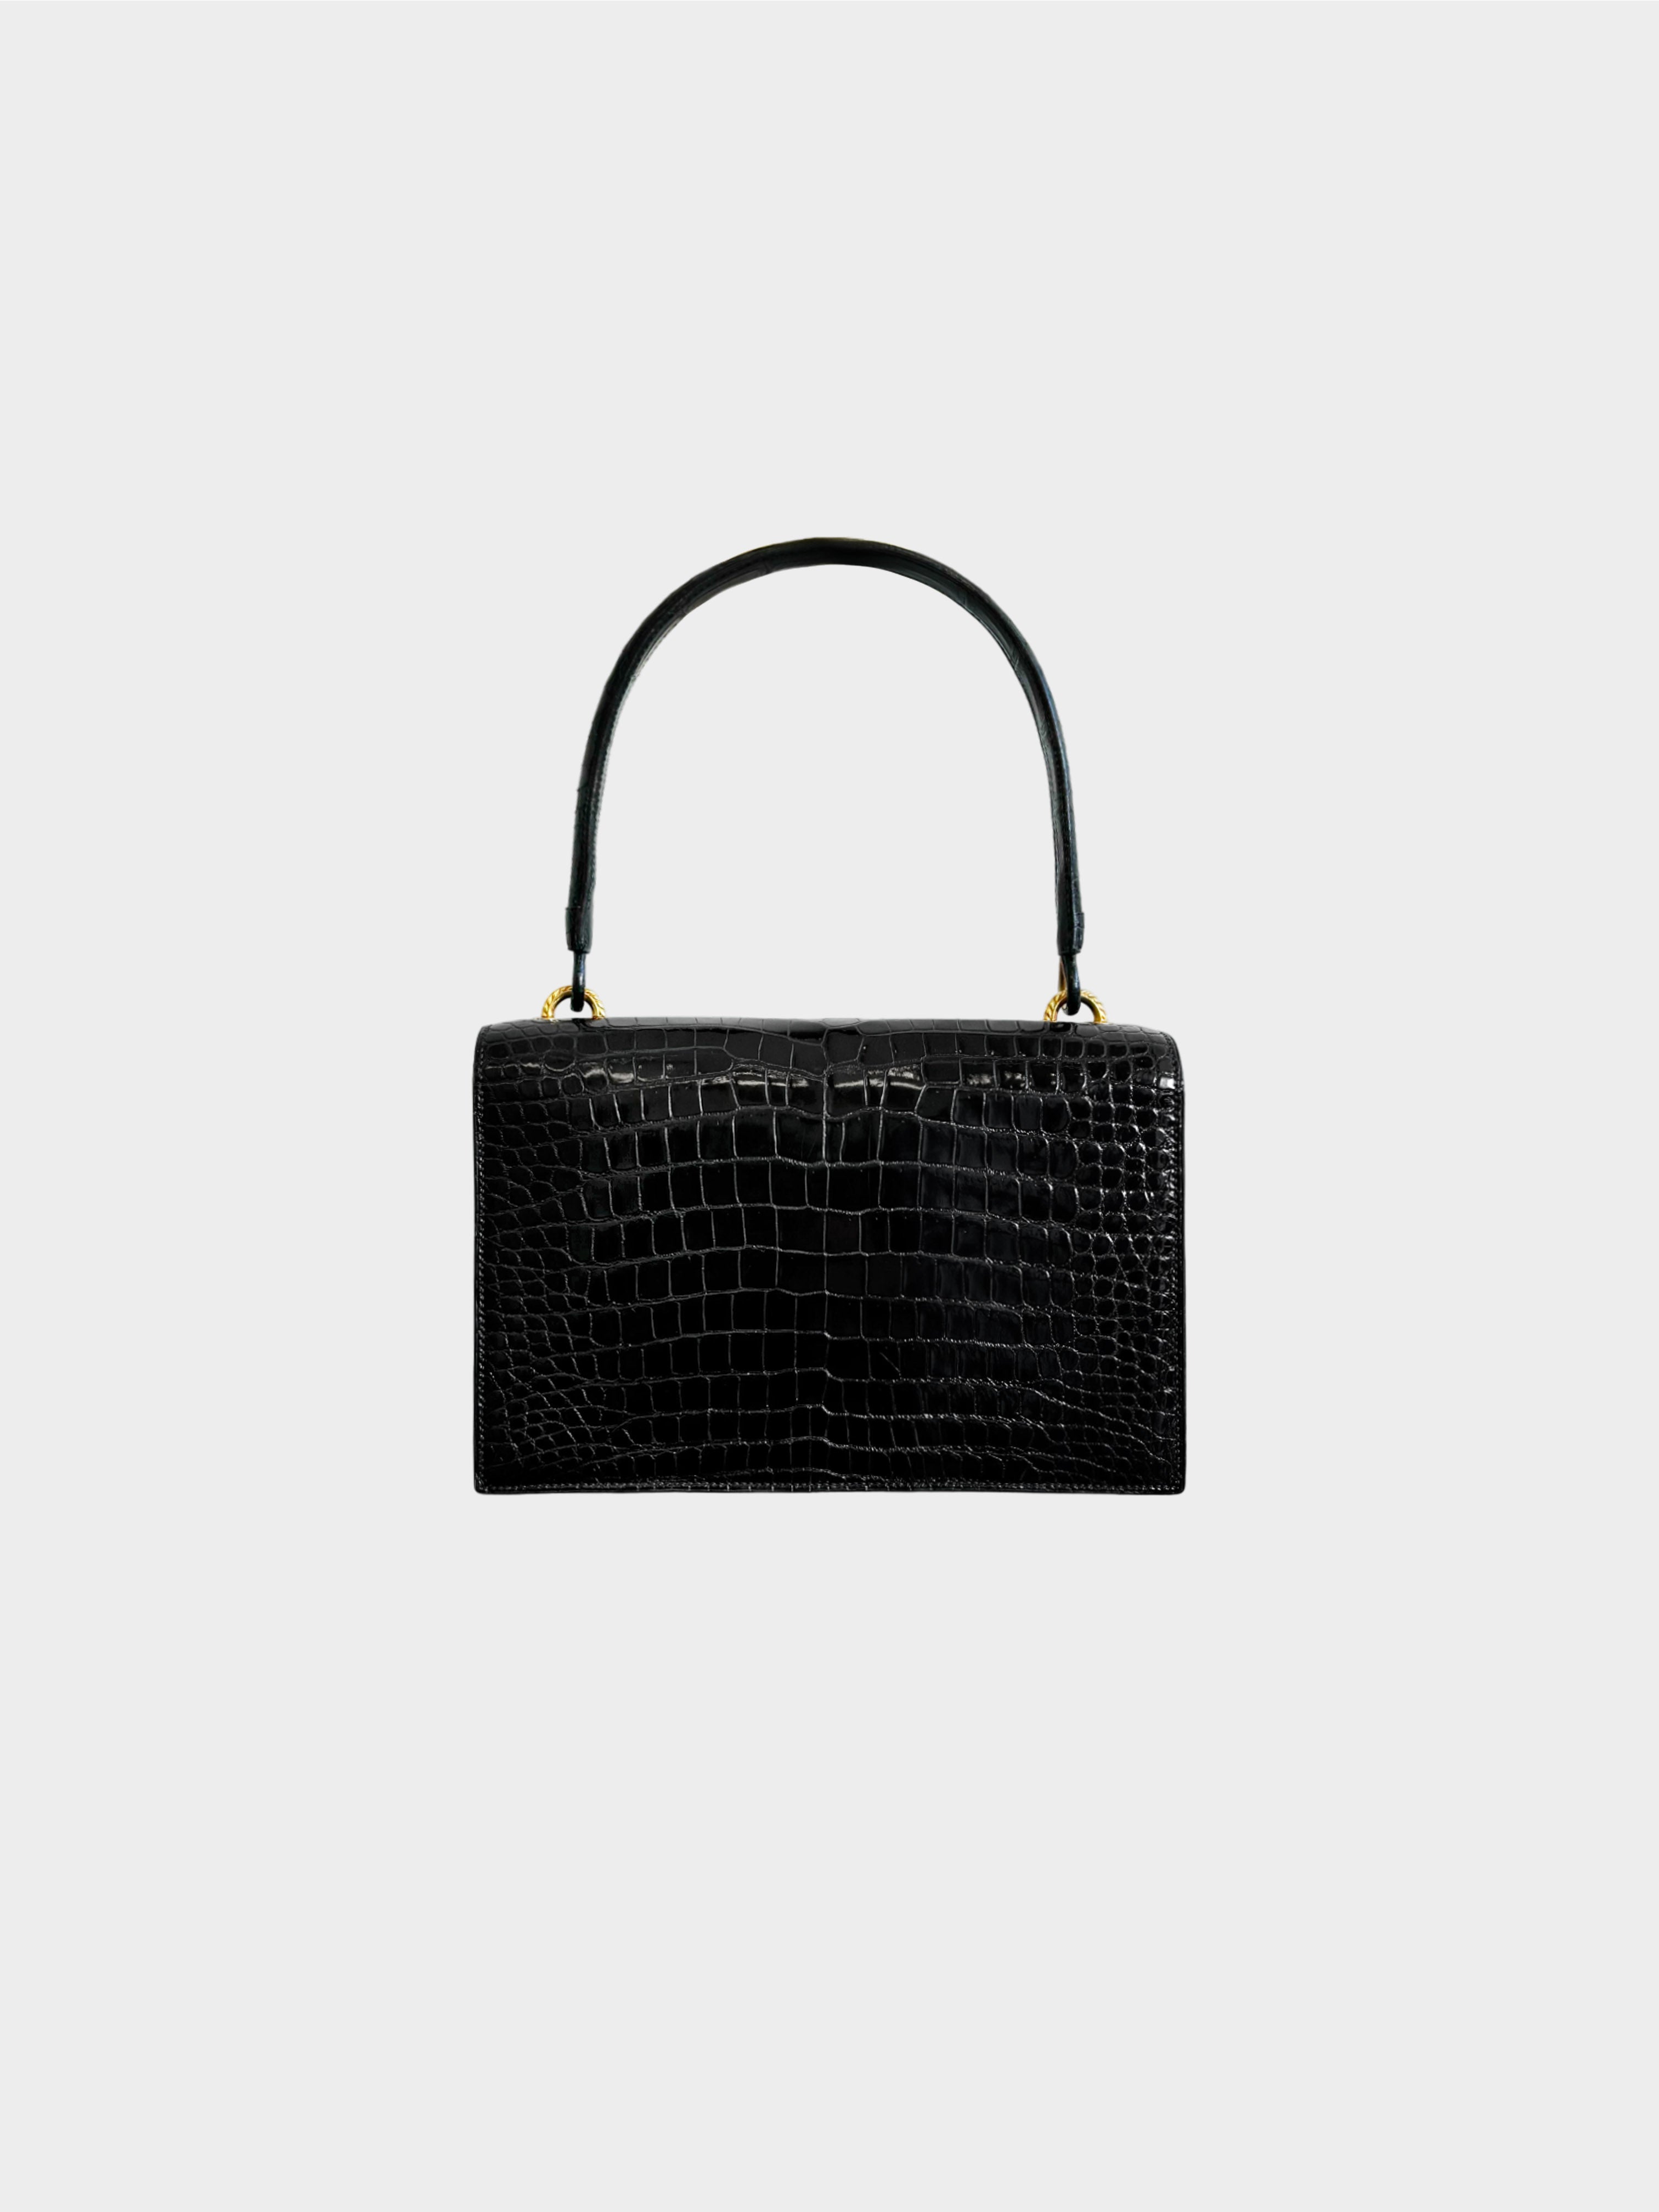 Hermès 1960s Black Sac Cordeau Handbag